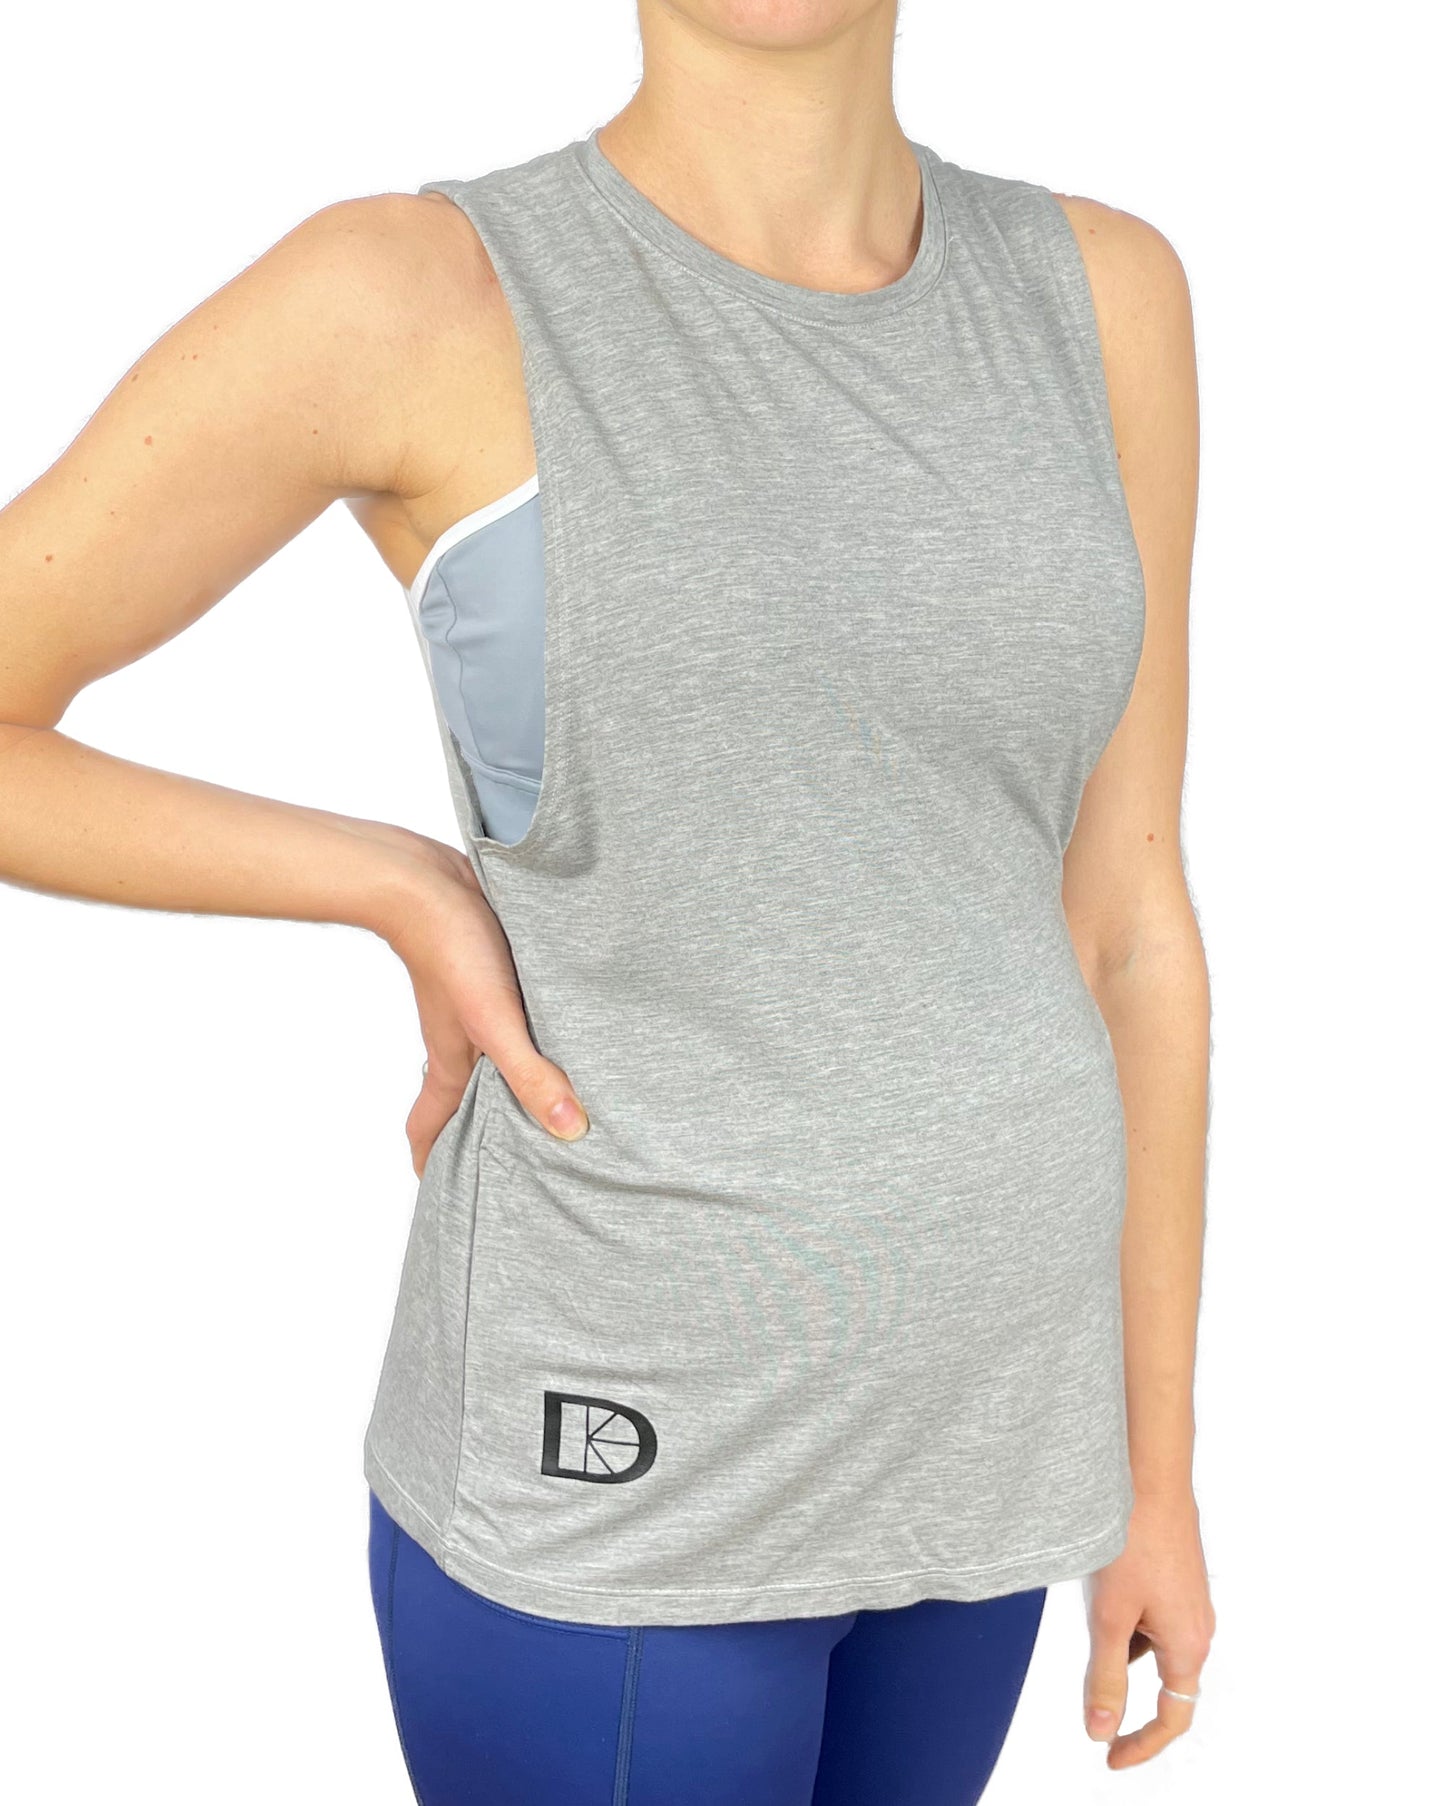 Pregnancy vest grey